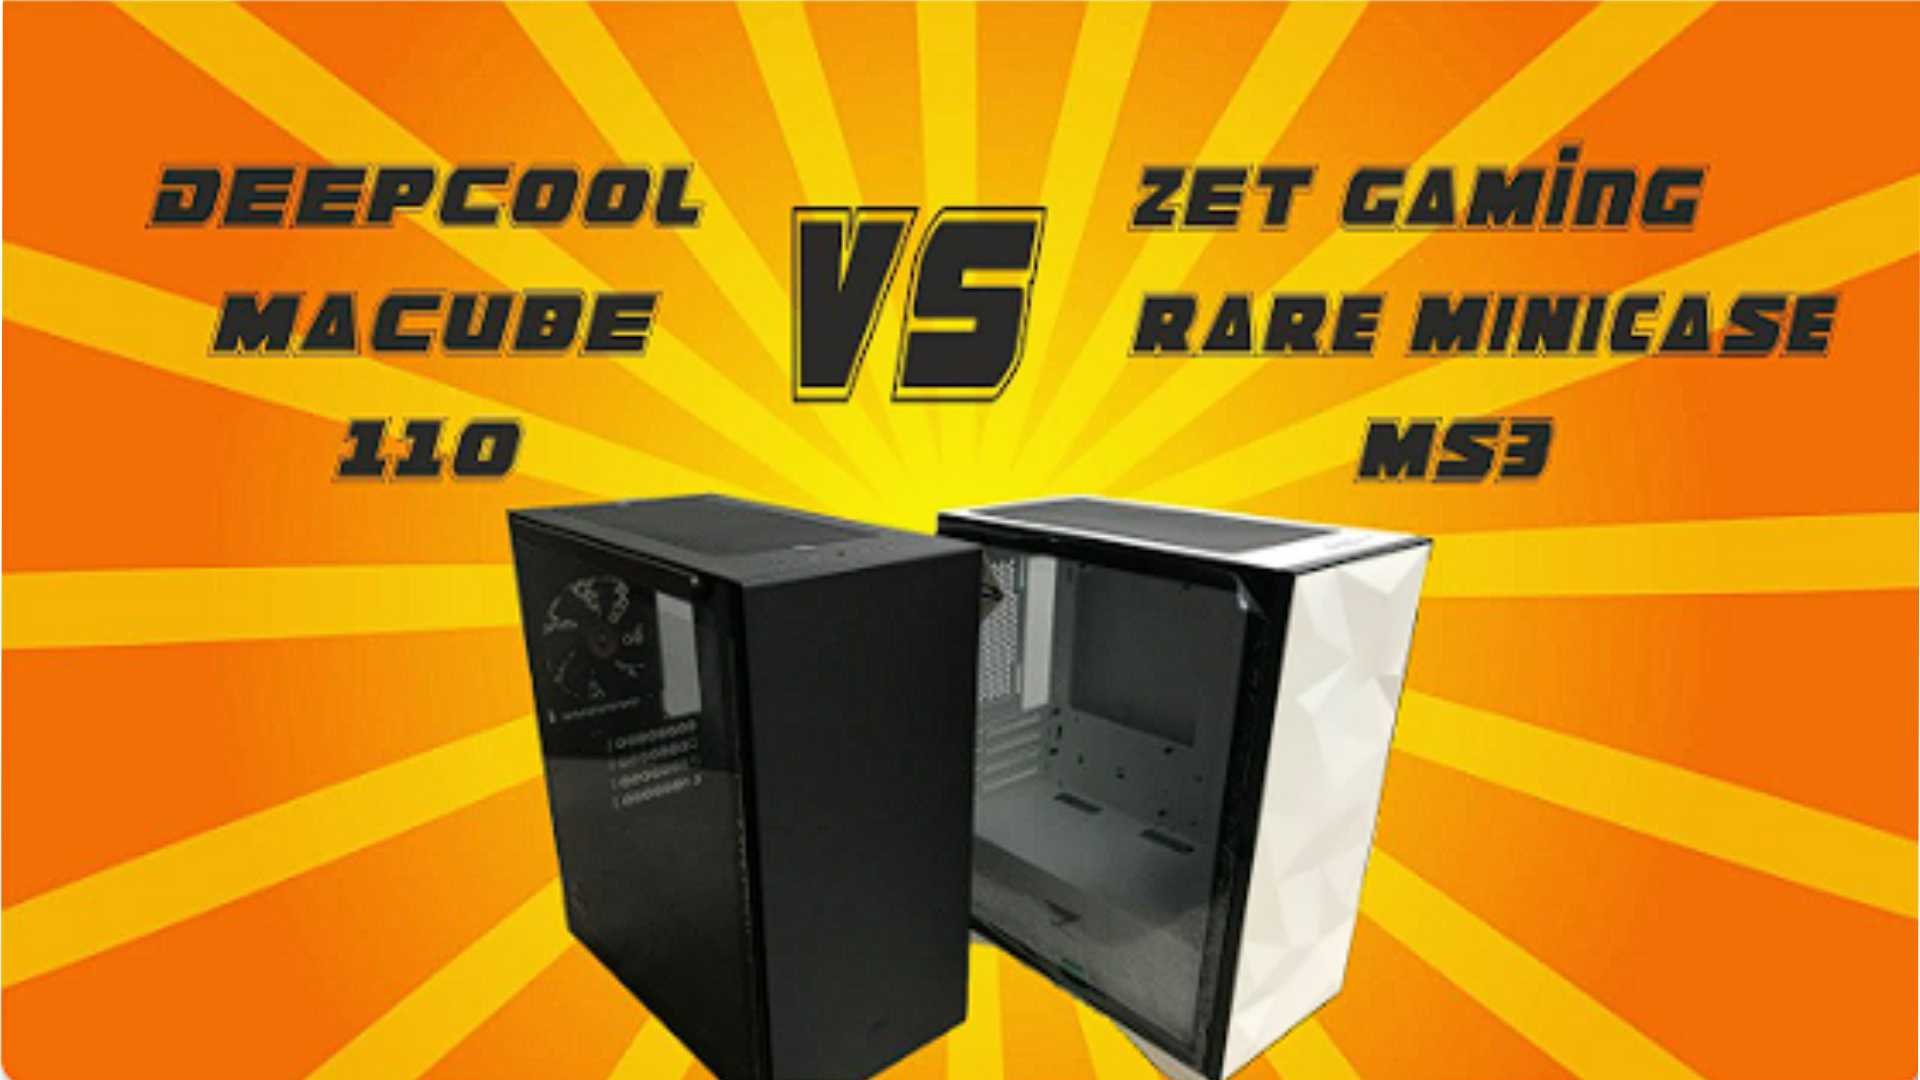 Ardor gaming minicase ms4